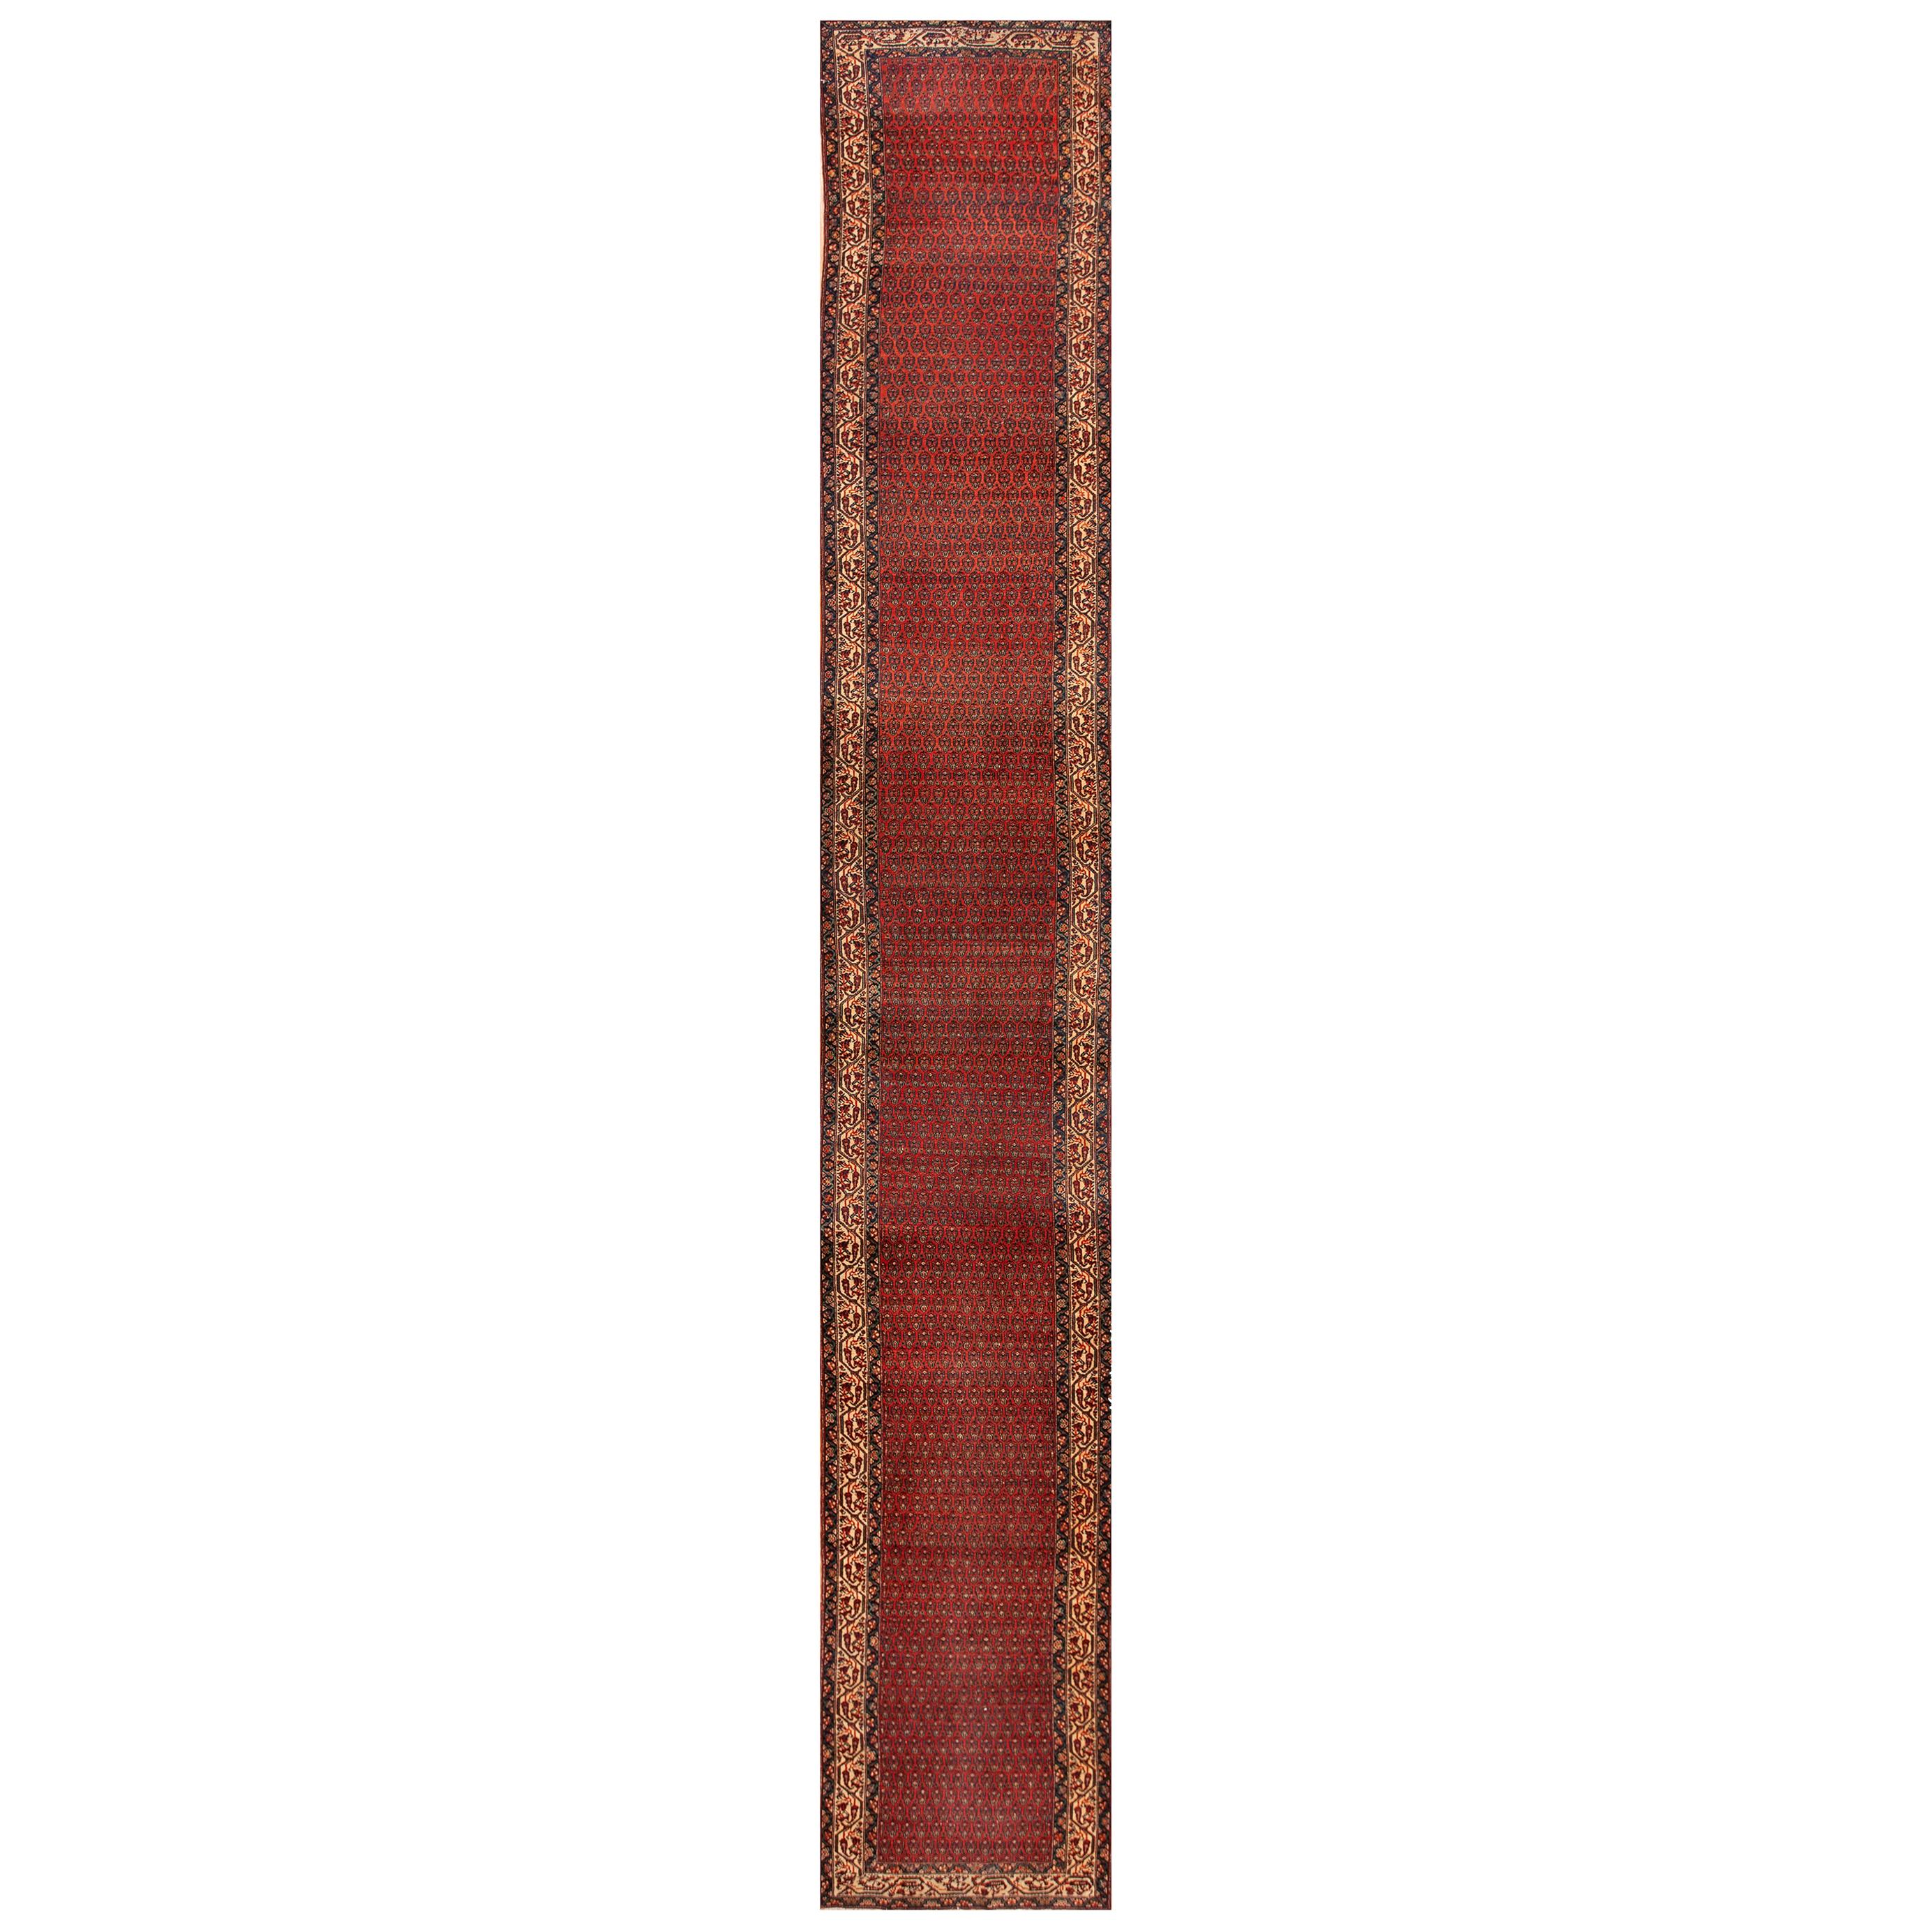 Early 20th Century Persian Seraband Carpet ( 2'10" x 16'9" - 86 x 511 )